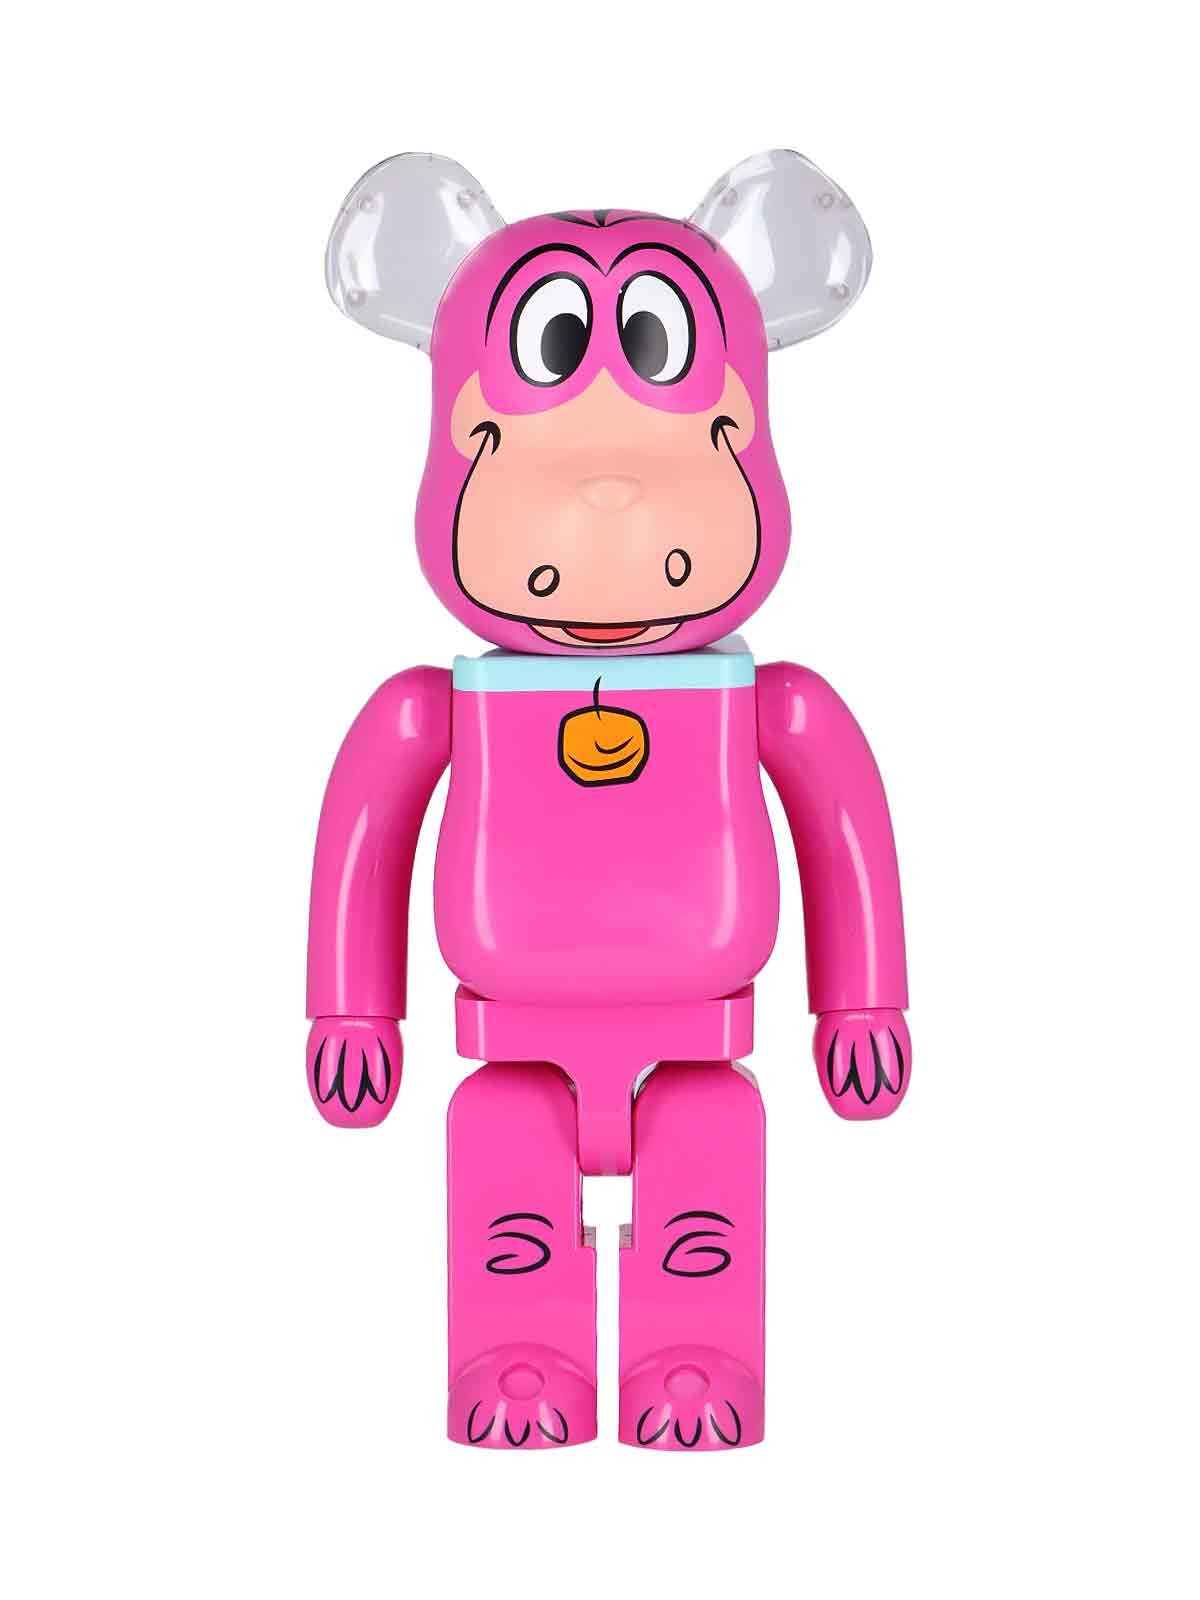 Medicom Toy Be@rbrick "the Flintstones Dino 1000%" In Pink